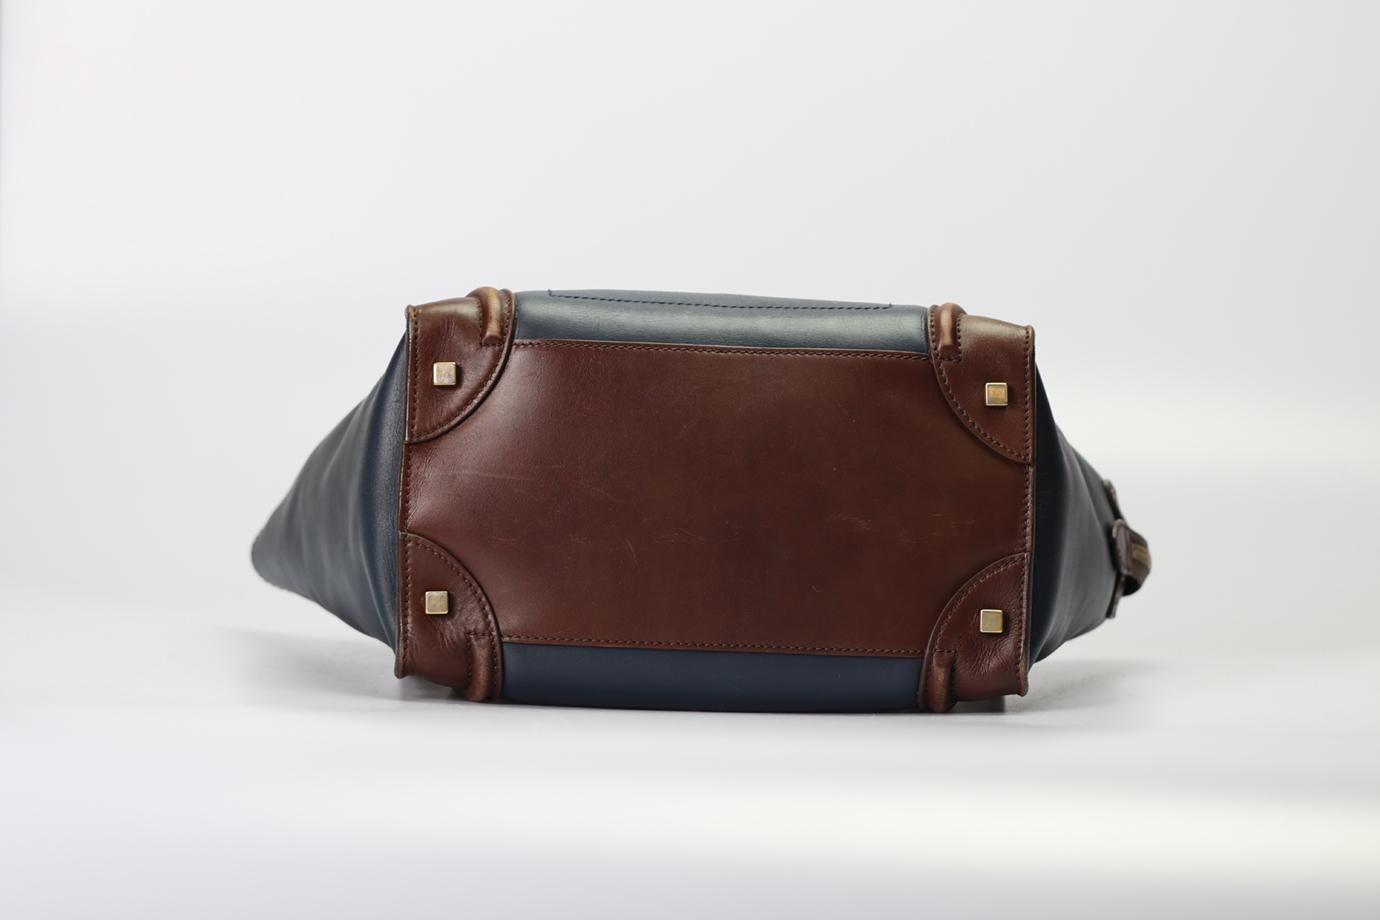 Celine Luggage Mini Leather Tote Bag For Sale 4